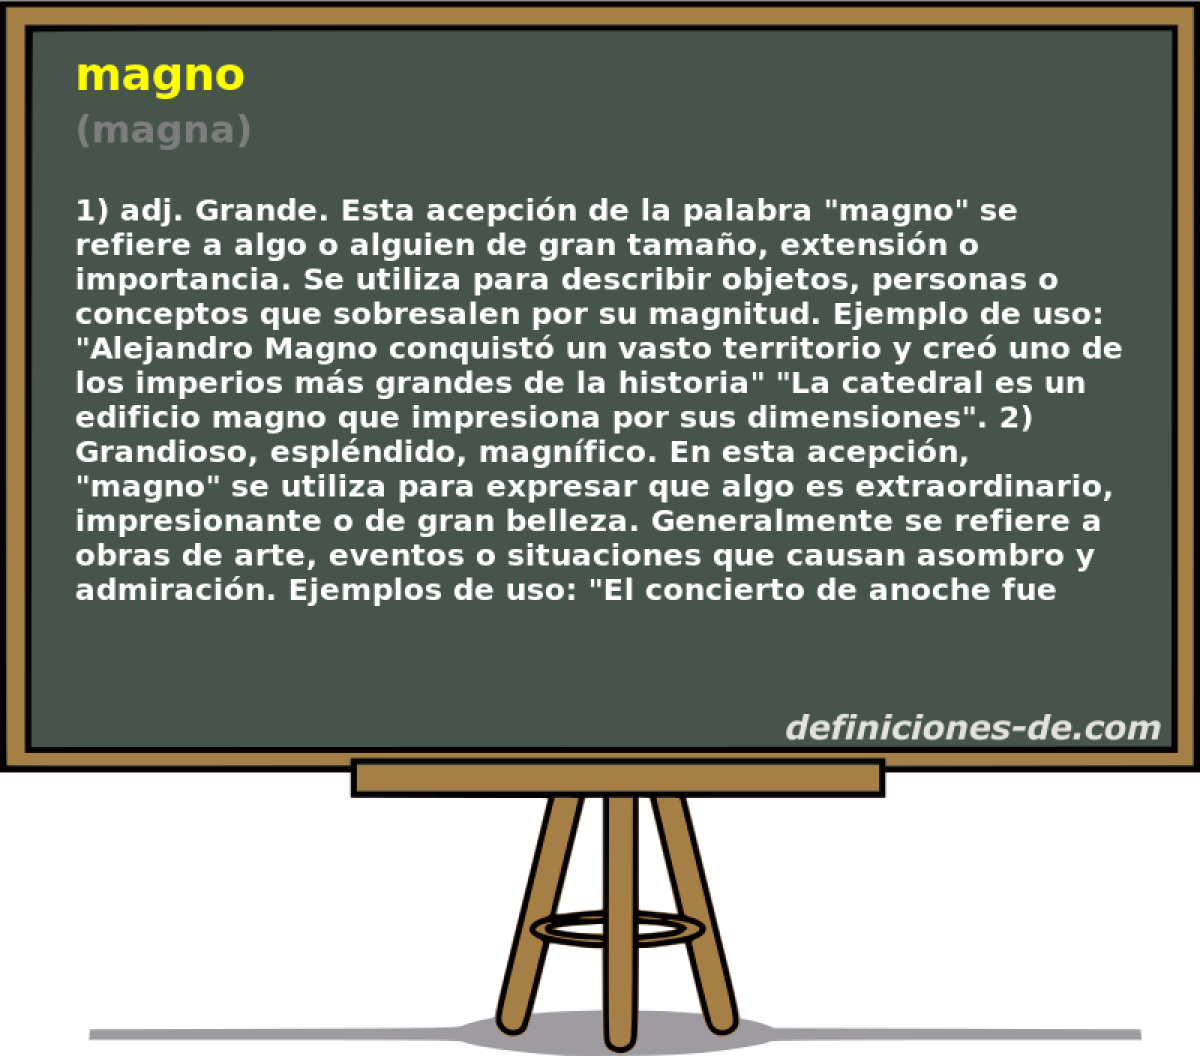 magno (magna)